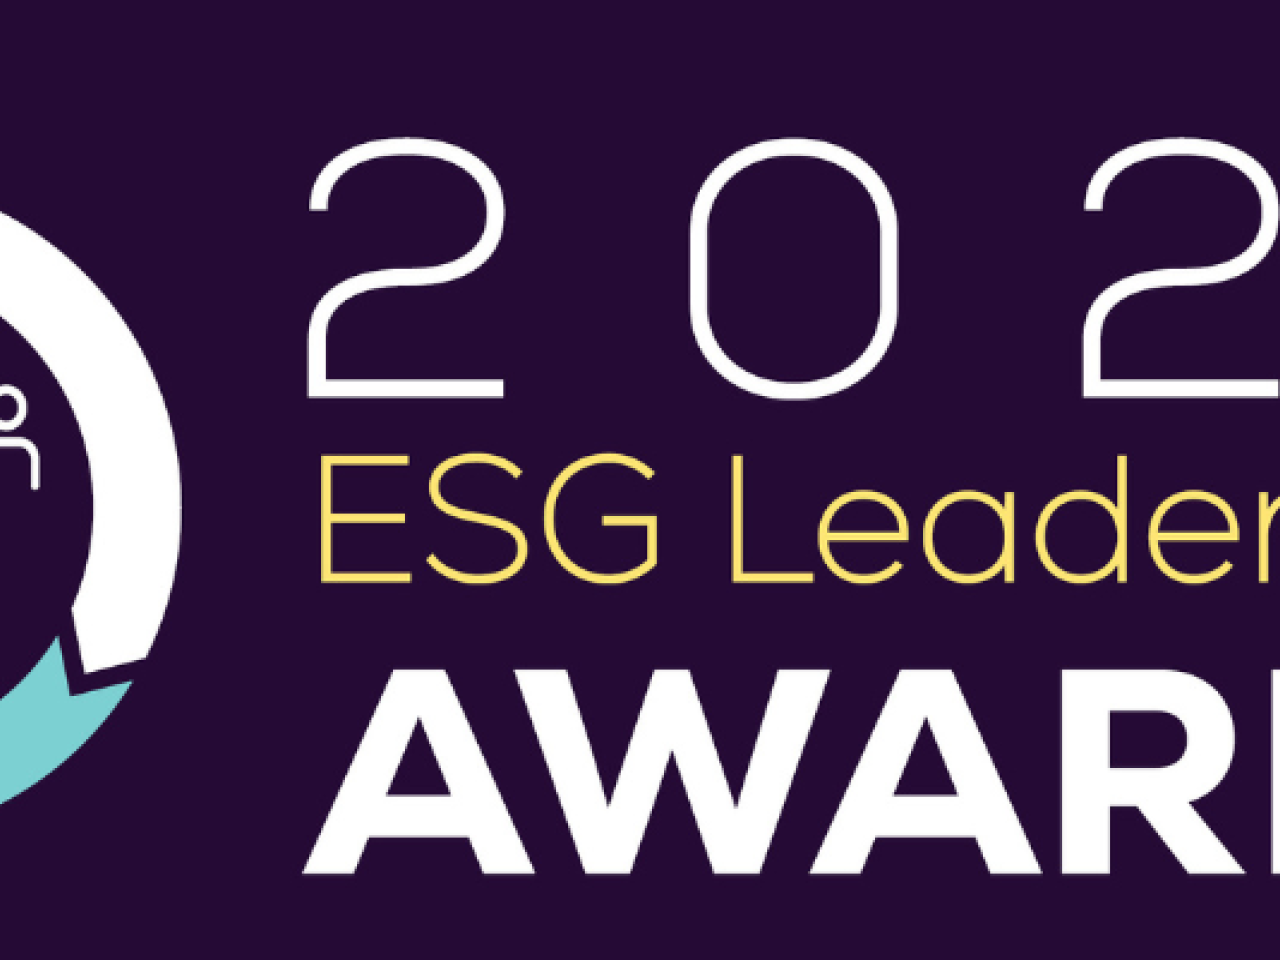 2024 ESG Leadership Awards